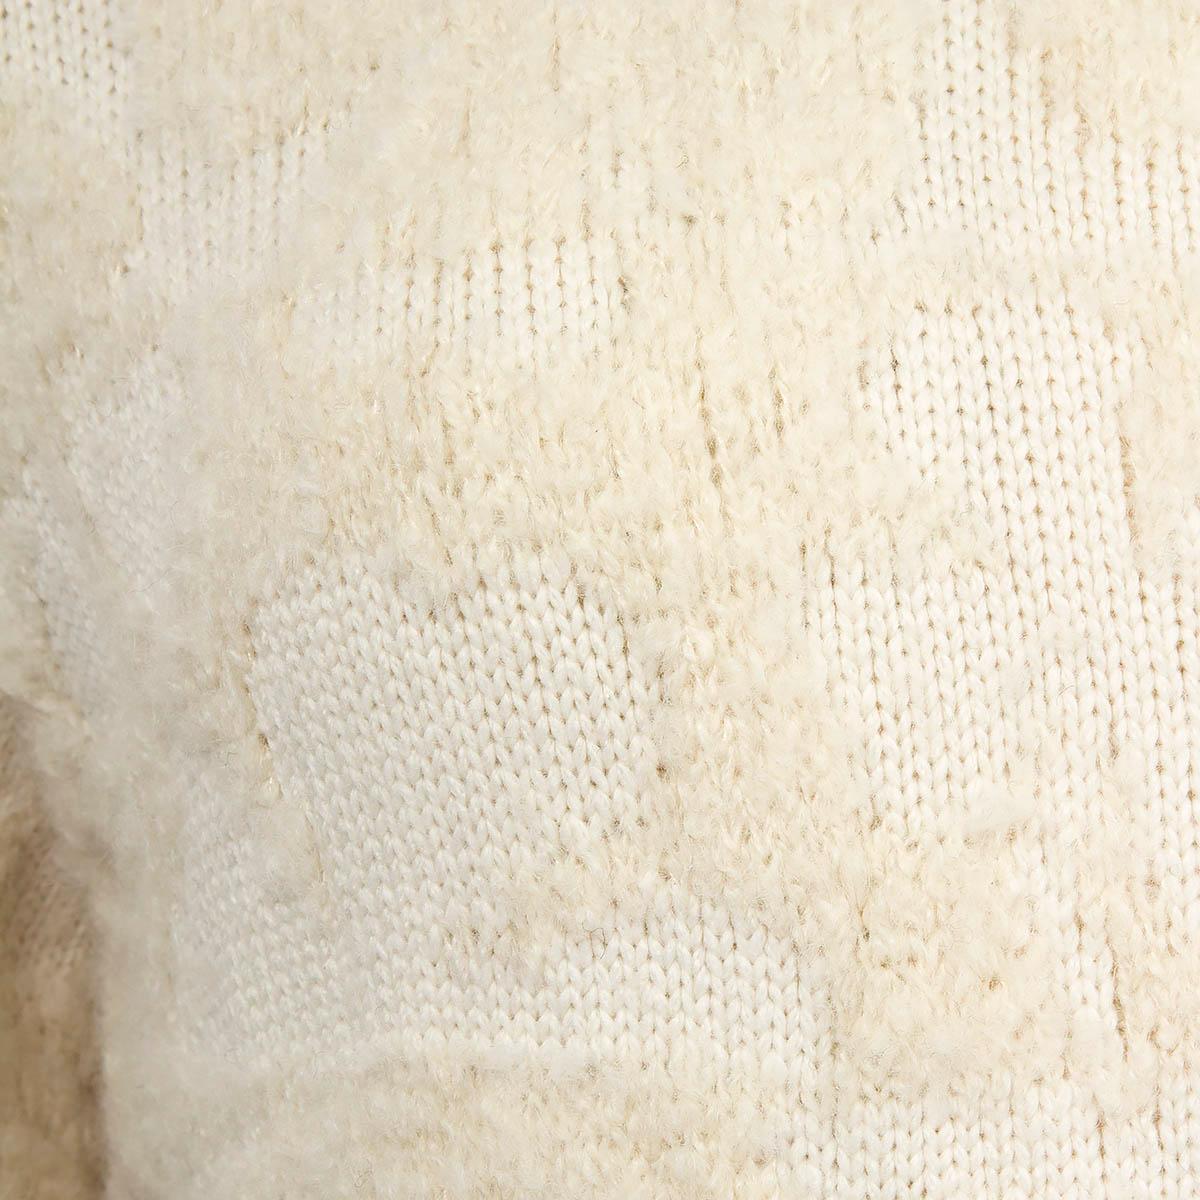 CHANEL ivory cashmere & alpaca 2020 20K Belted Knit Coat Jacket 36 XS 2